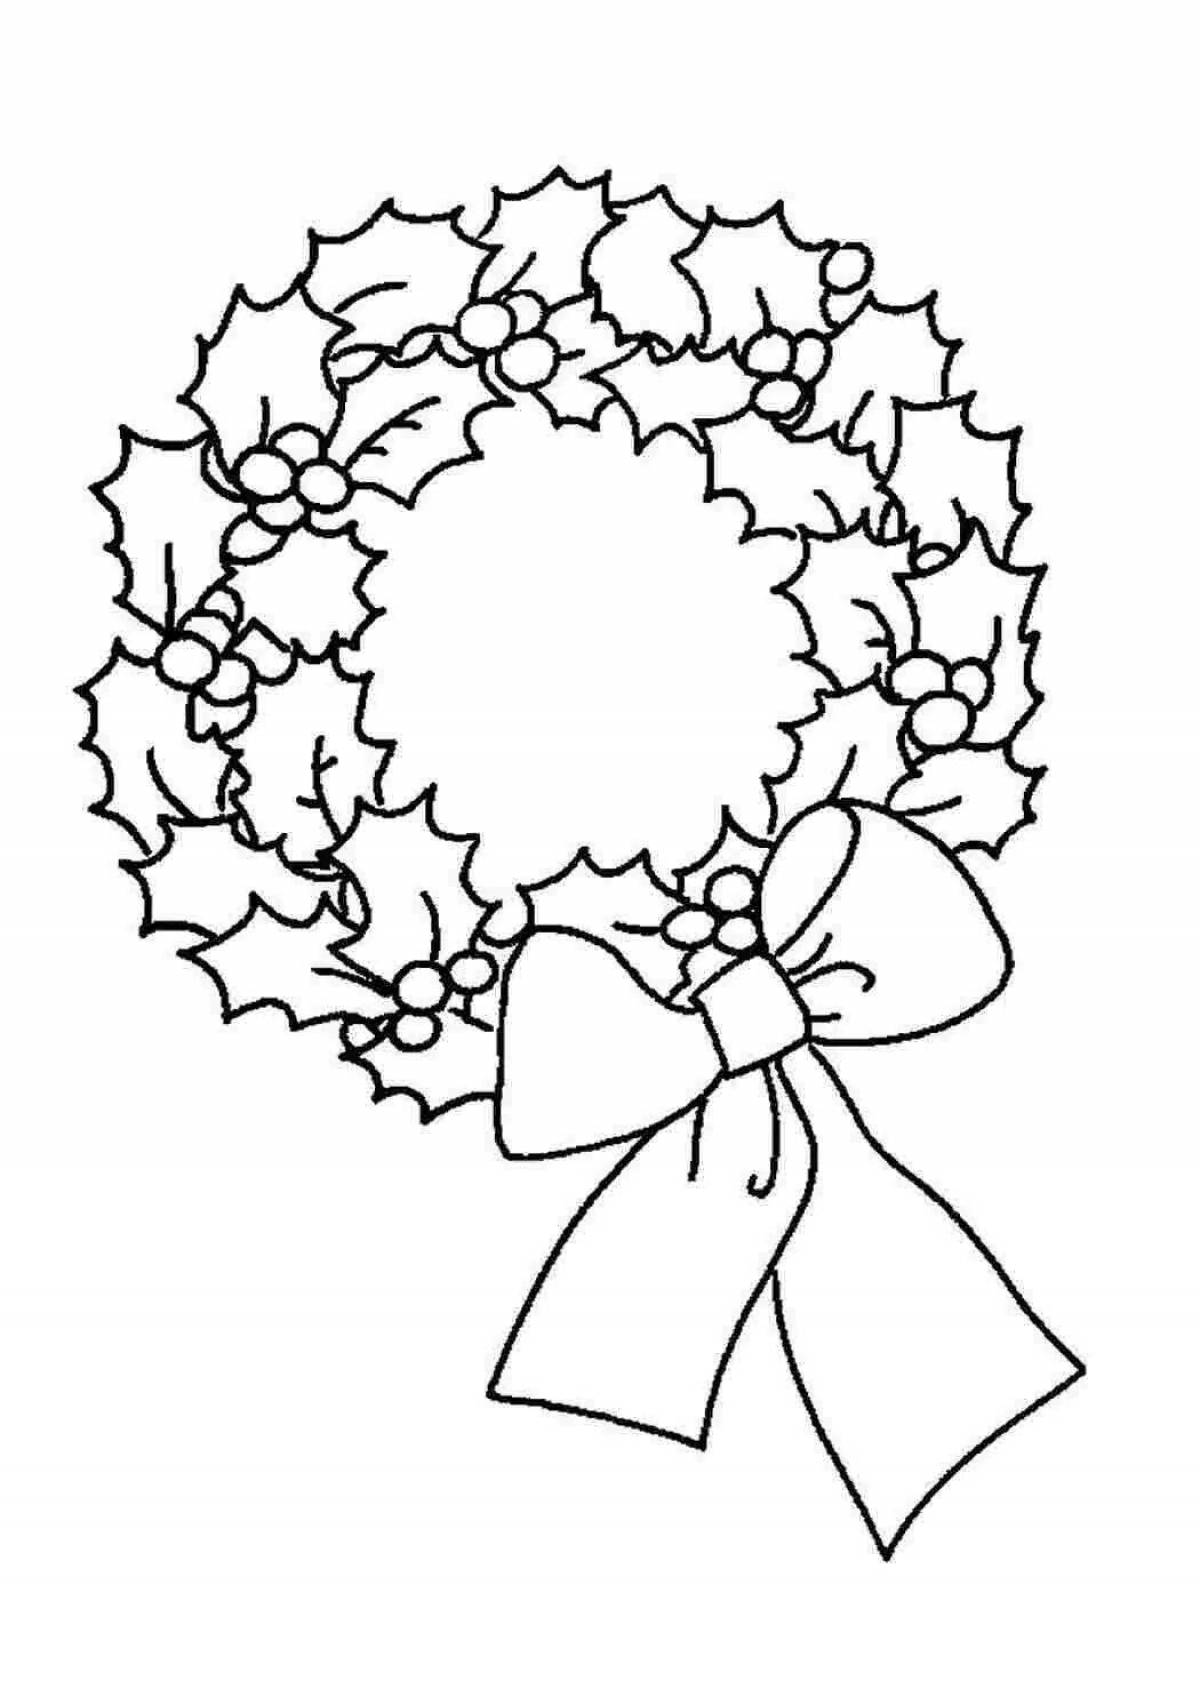 Luminous Christmas wreath coloring book for kids